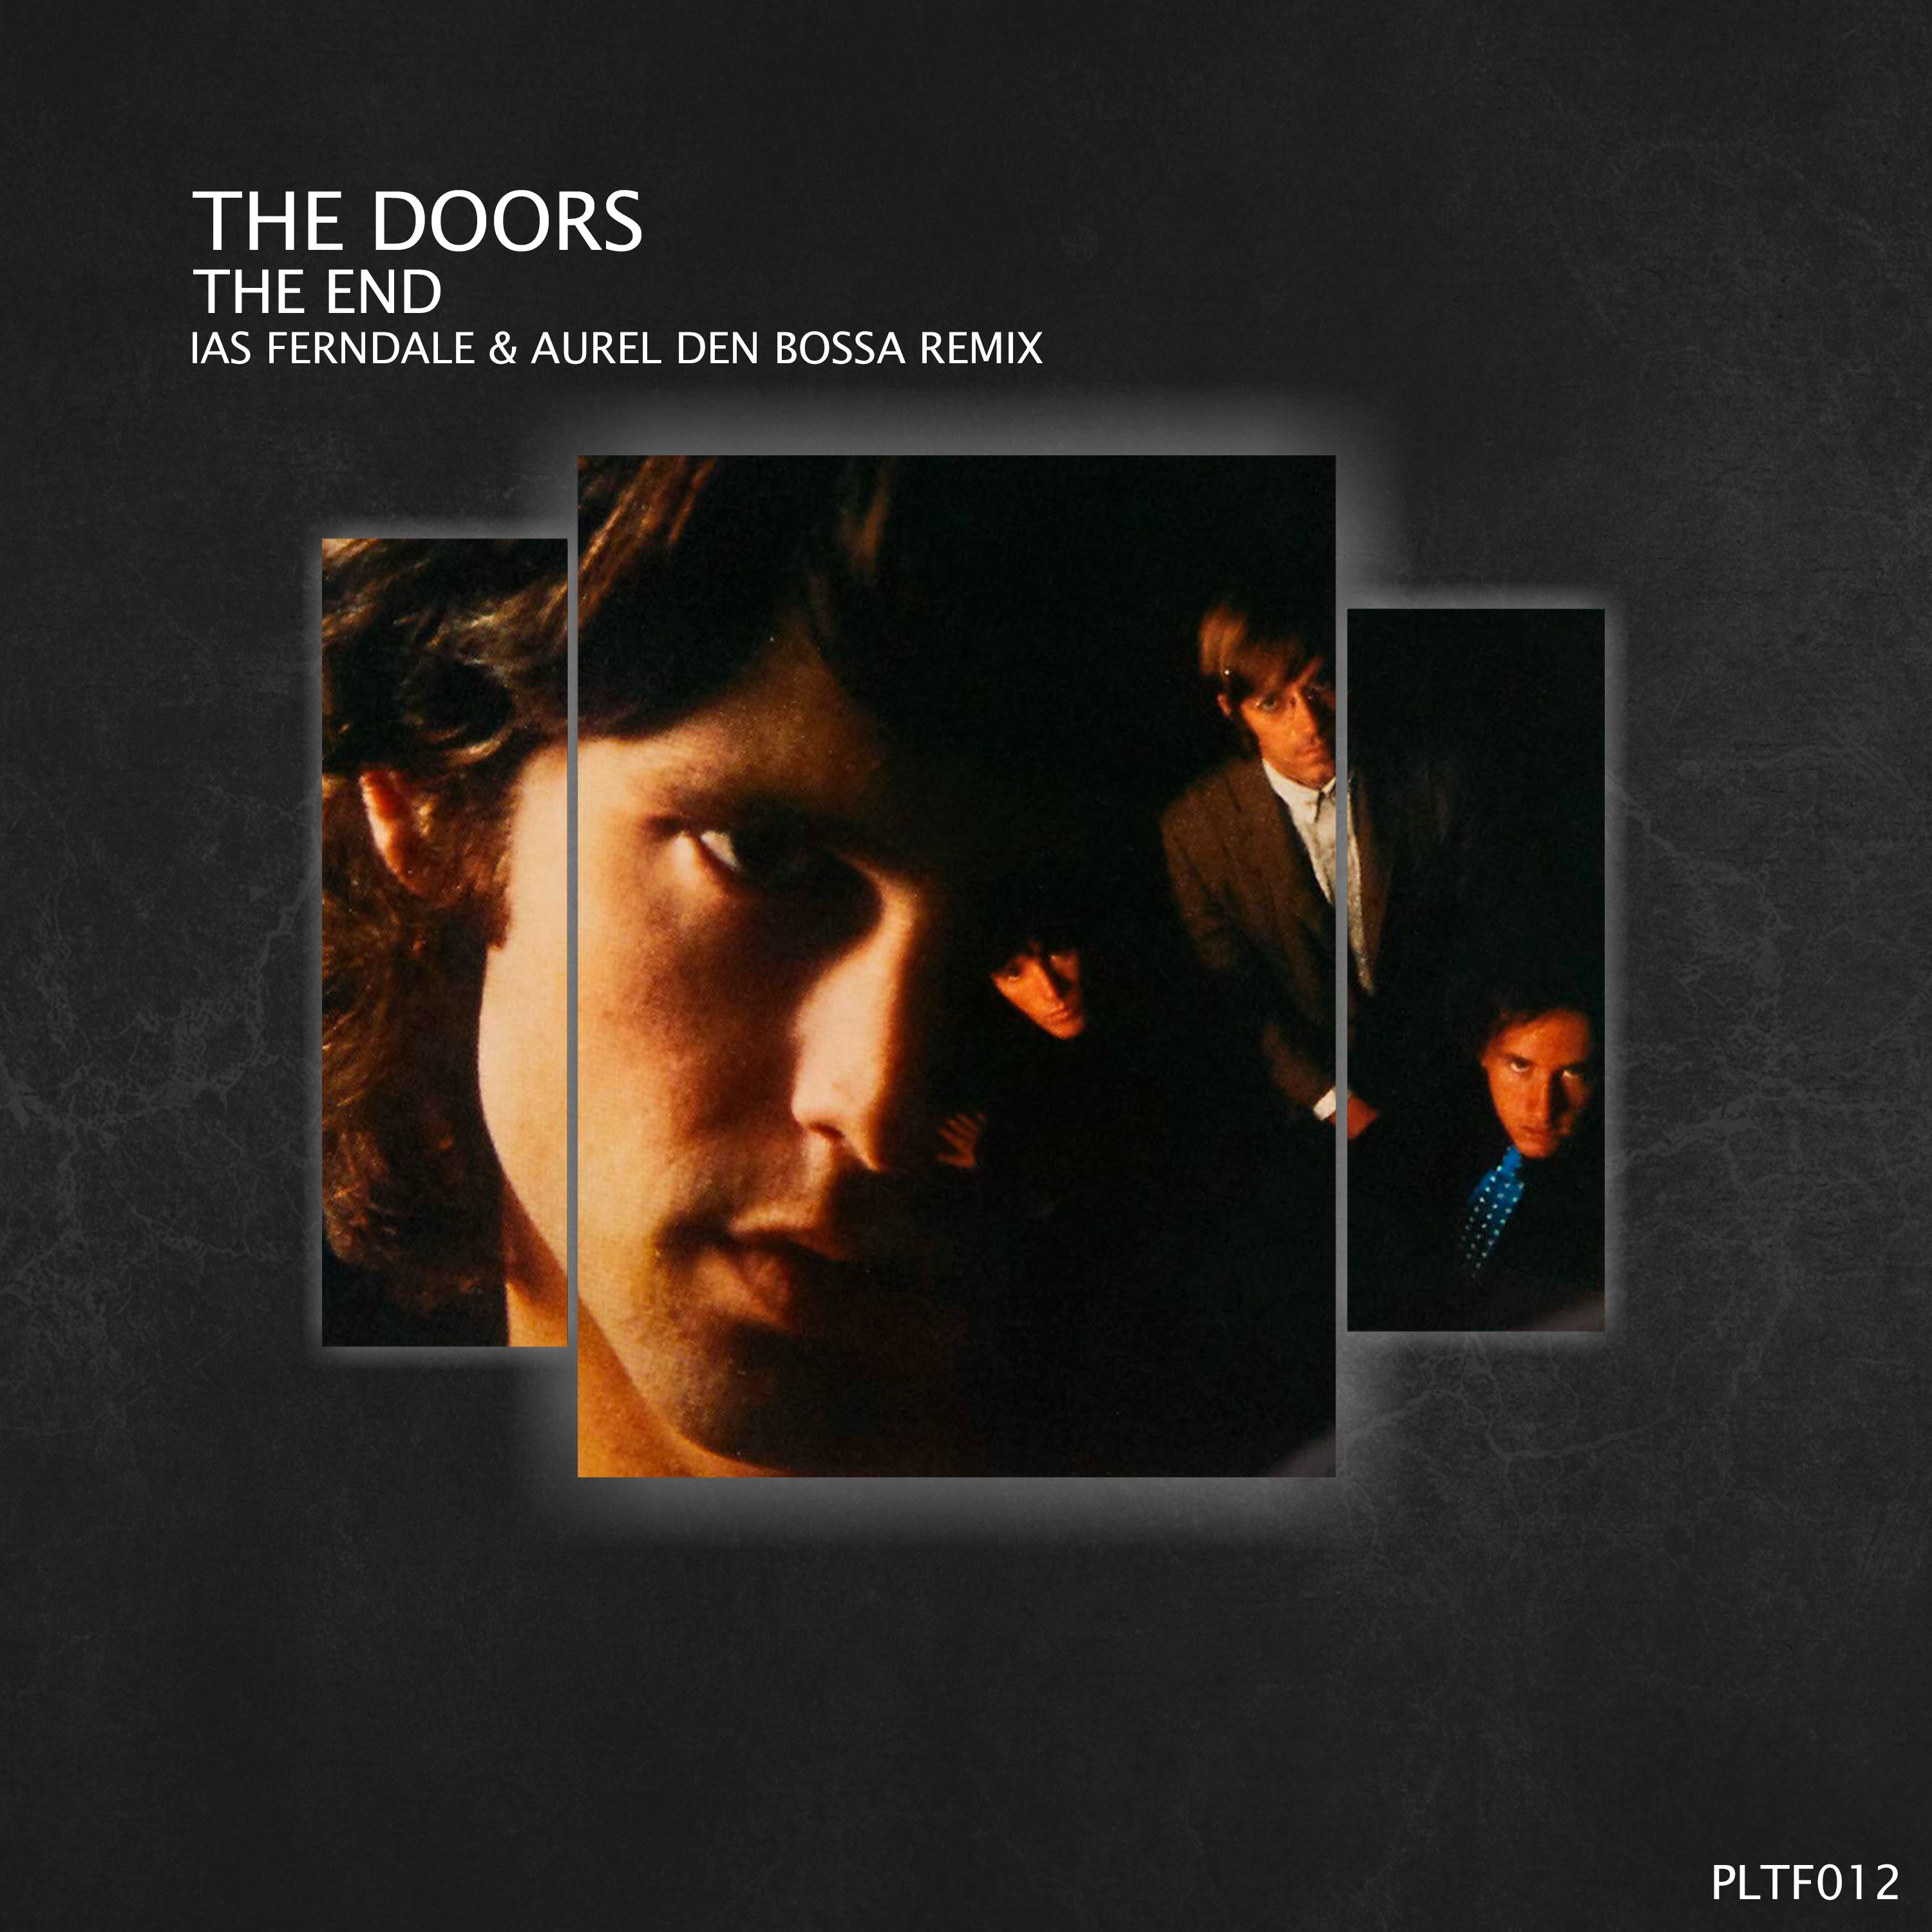 Atsisiųsti! The Doors - The End (Ias Ferndale & Aurel den Bossa Remix) [Free Download]